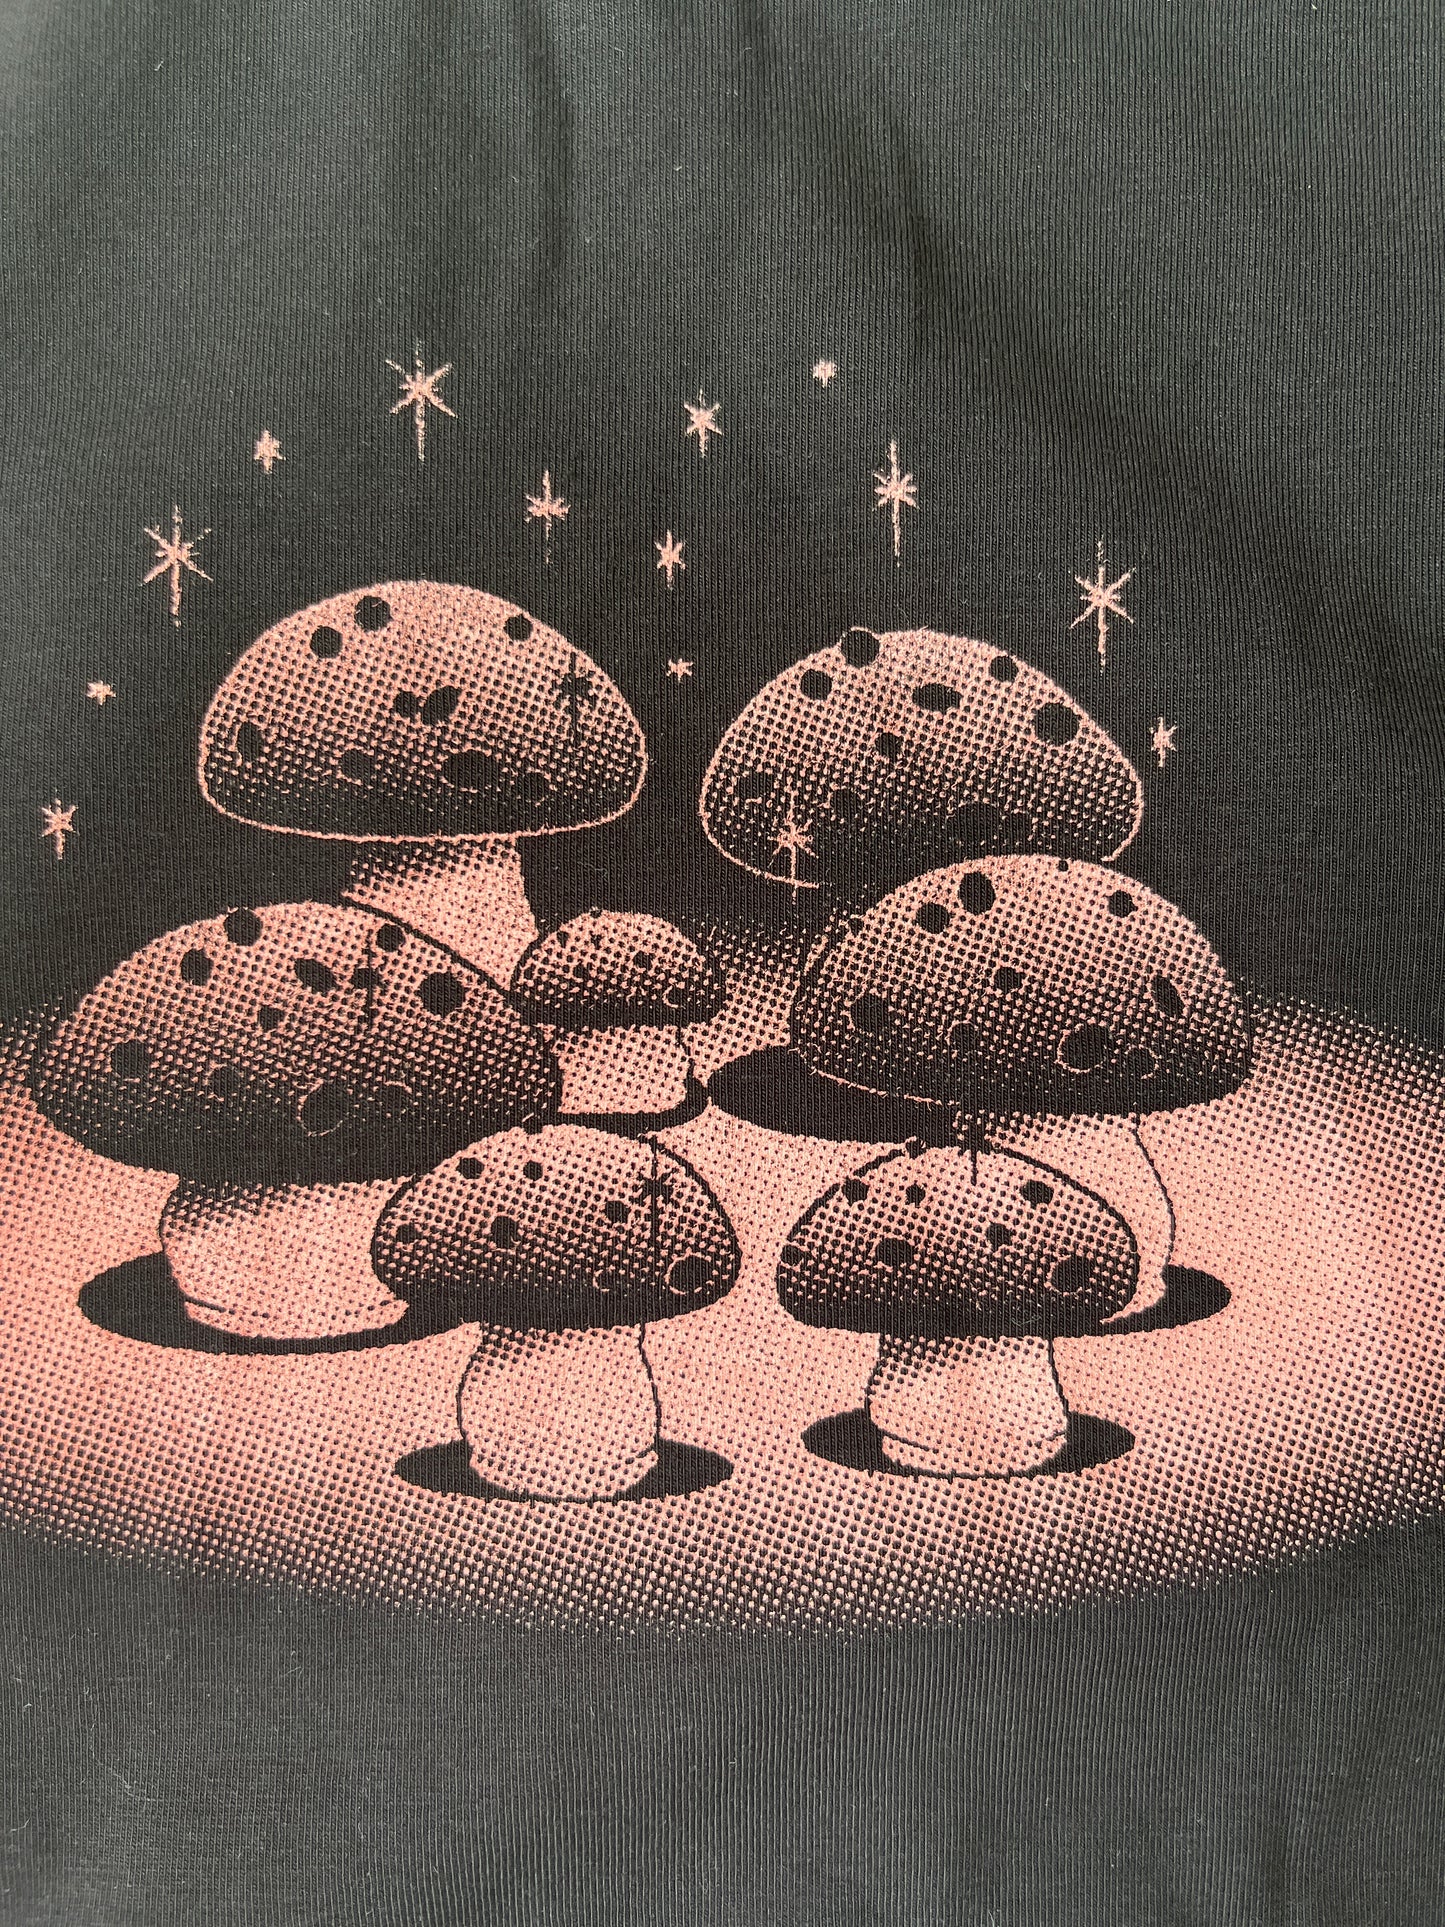 Moonlit Mushroom Tank - Size 14